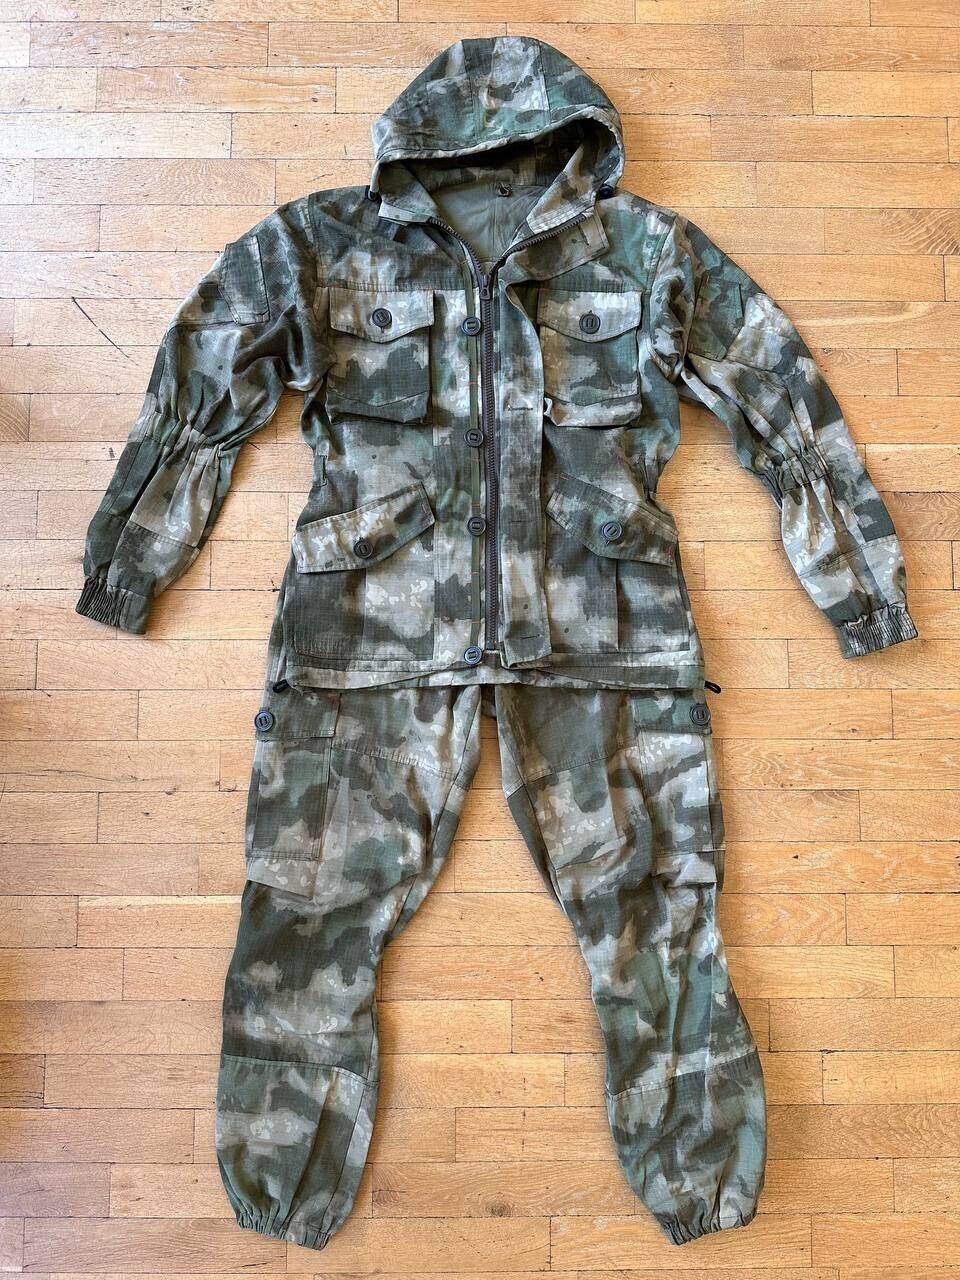 Original Russian Army Military Uniform Camo Suit Jacket Pants Ratnik MOSS - M sz